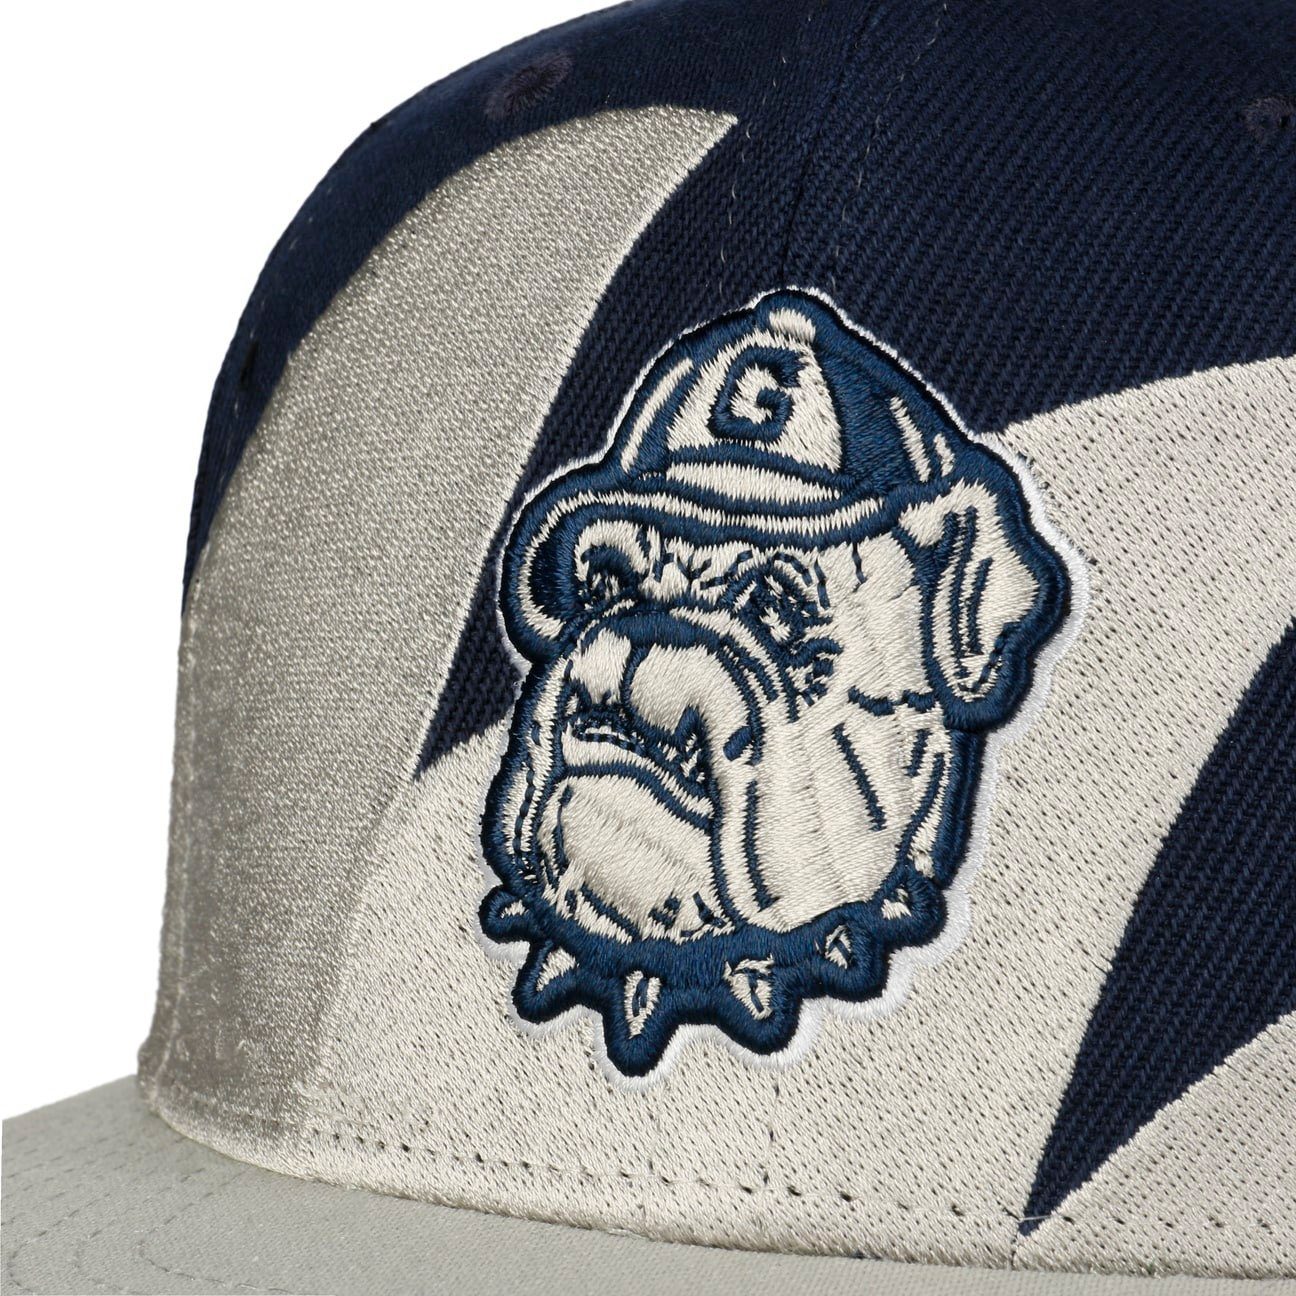 Mitchell & Ness Baseball Basecap Snapback Cap (1-St)